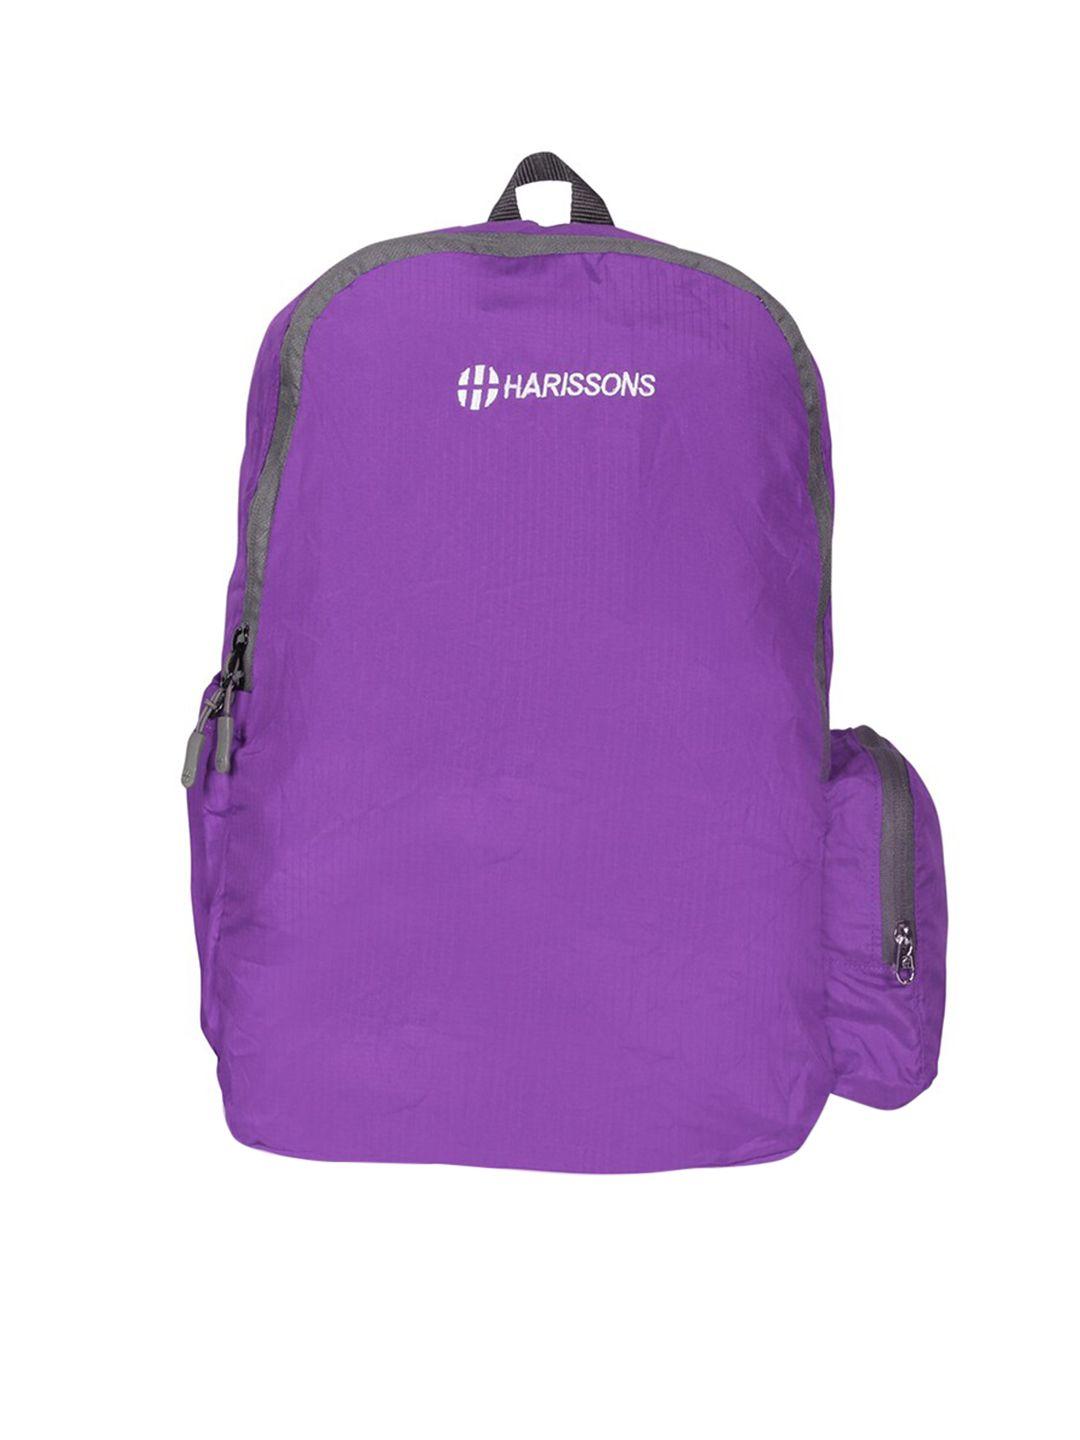 harissons unisex purple & grey backpack